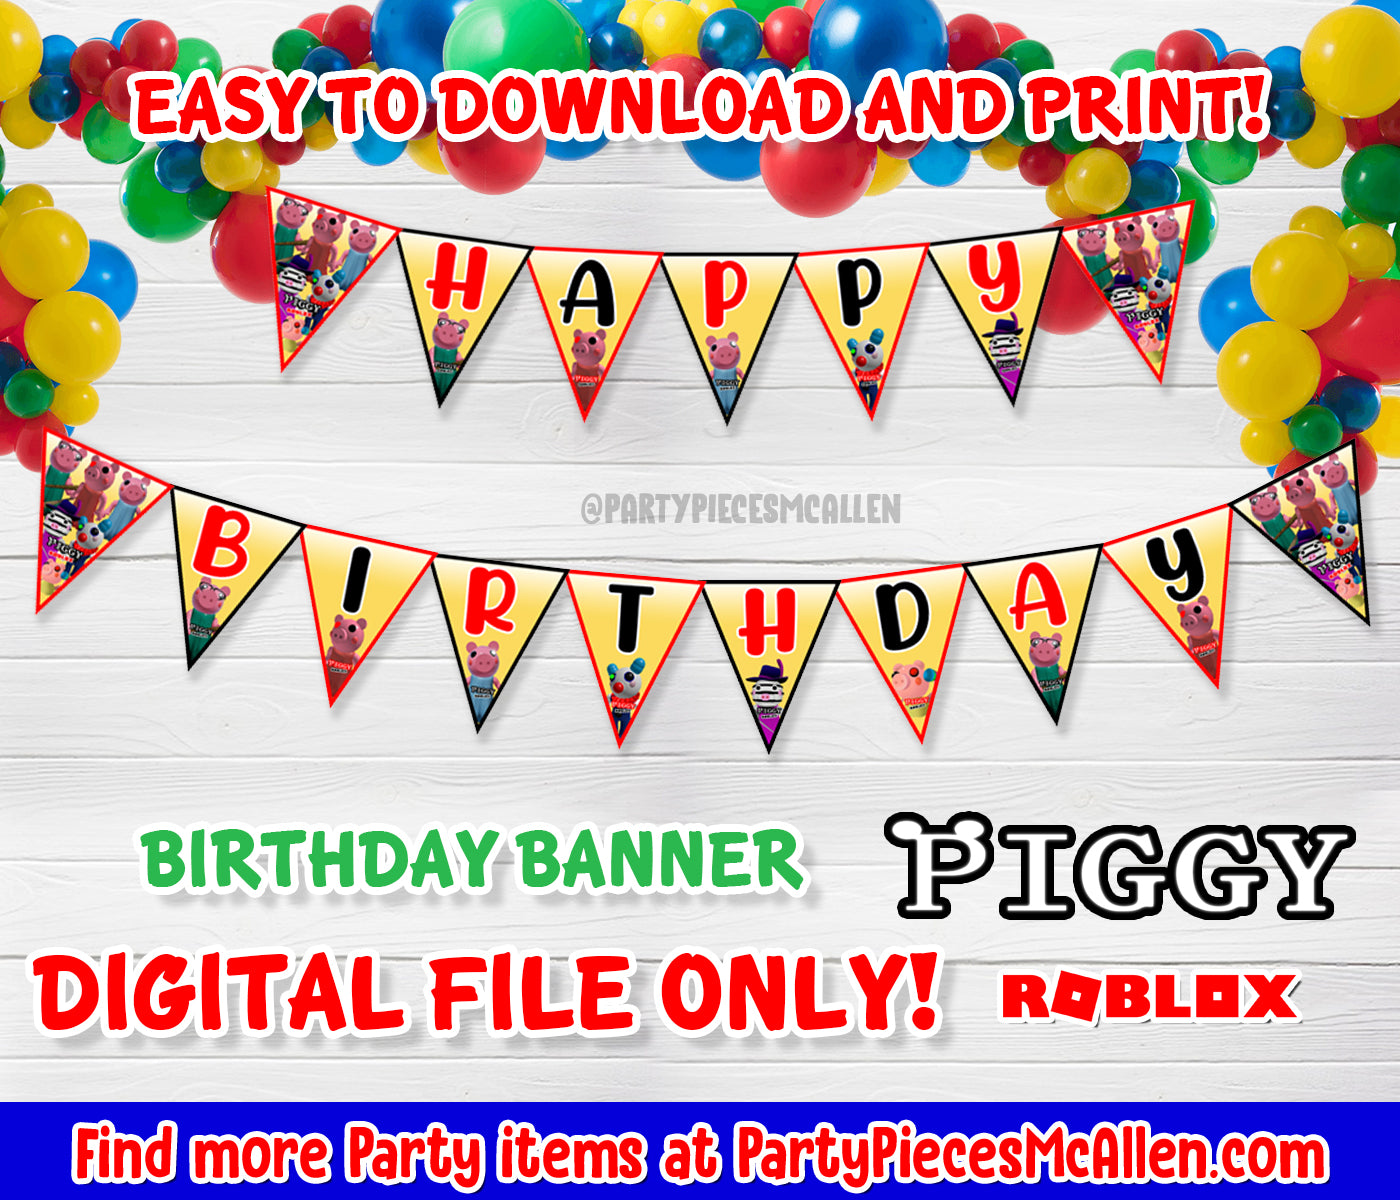 Piggy Roblox Birthday Banner Digital File Party Pieces Mcallen - roblox party roblox birthday banner